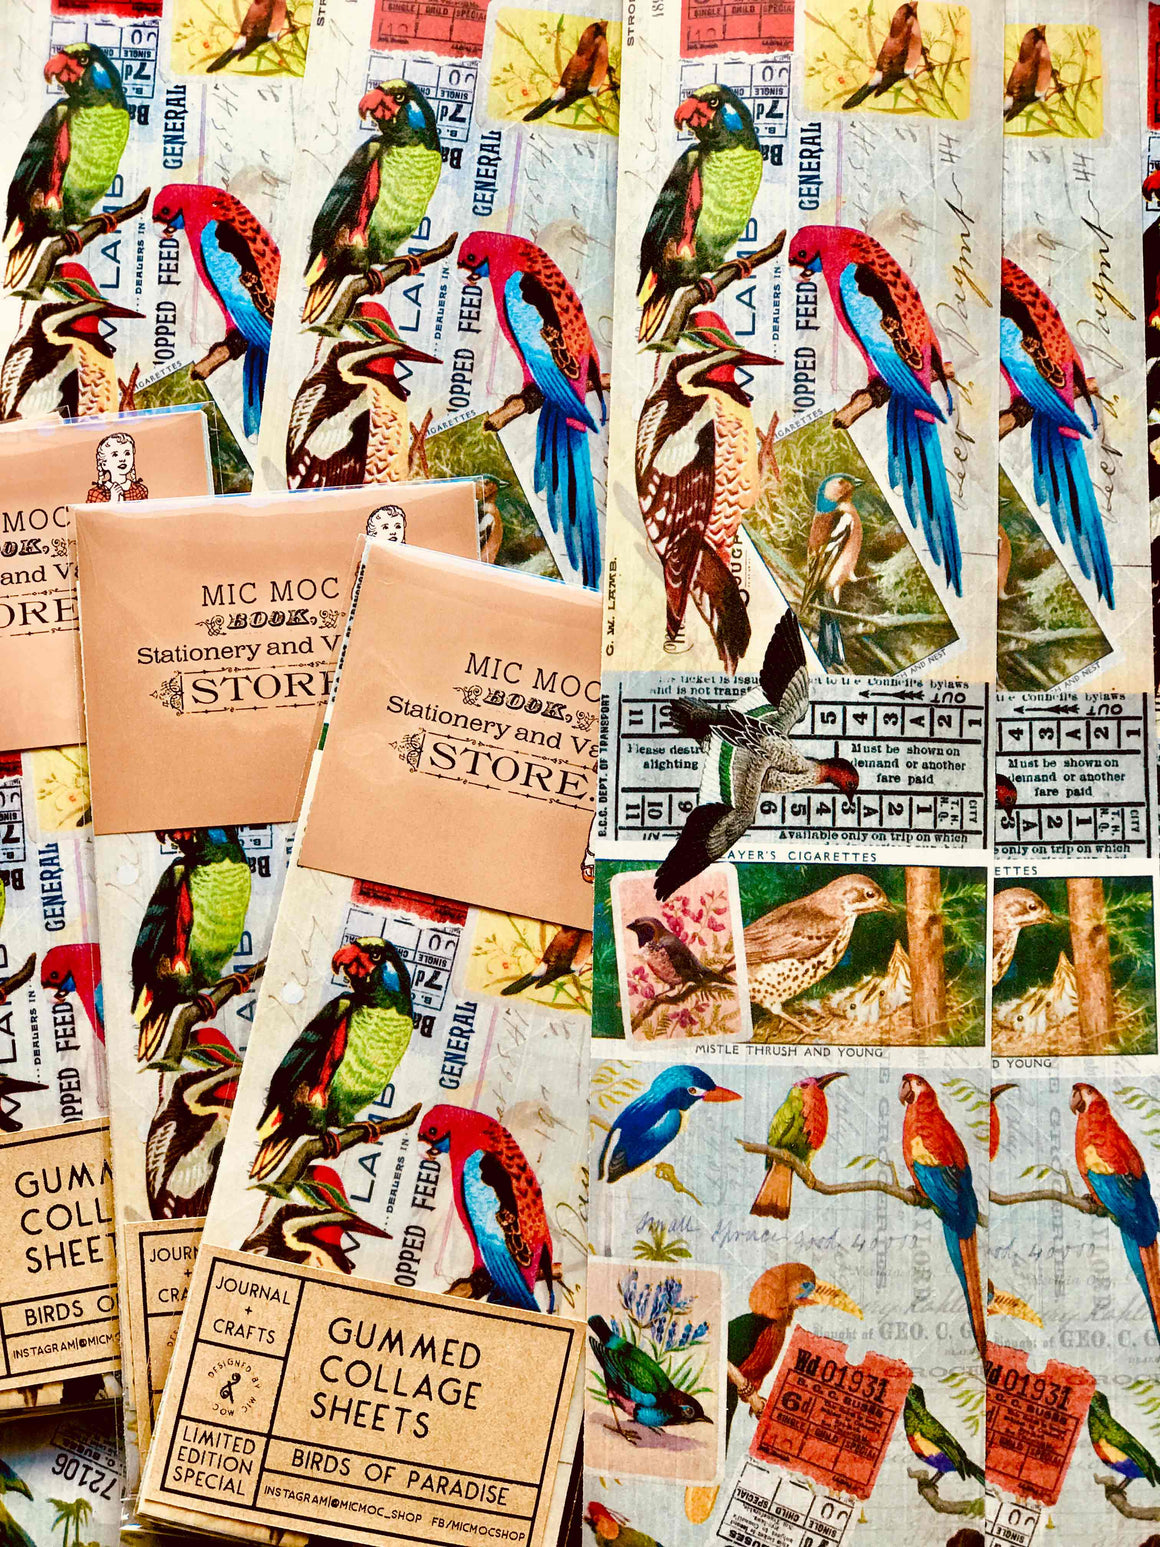 Gummed Collage Sheets - GCS 008 'Birds of Paradise'